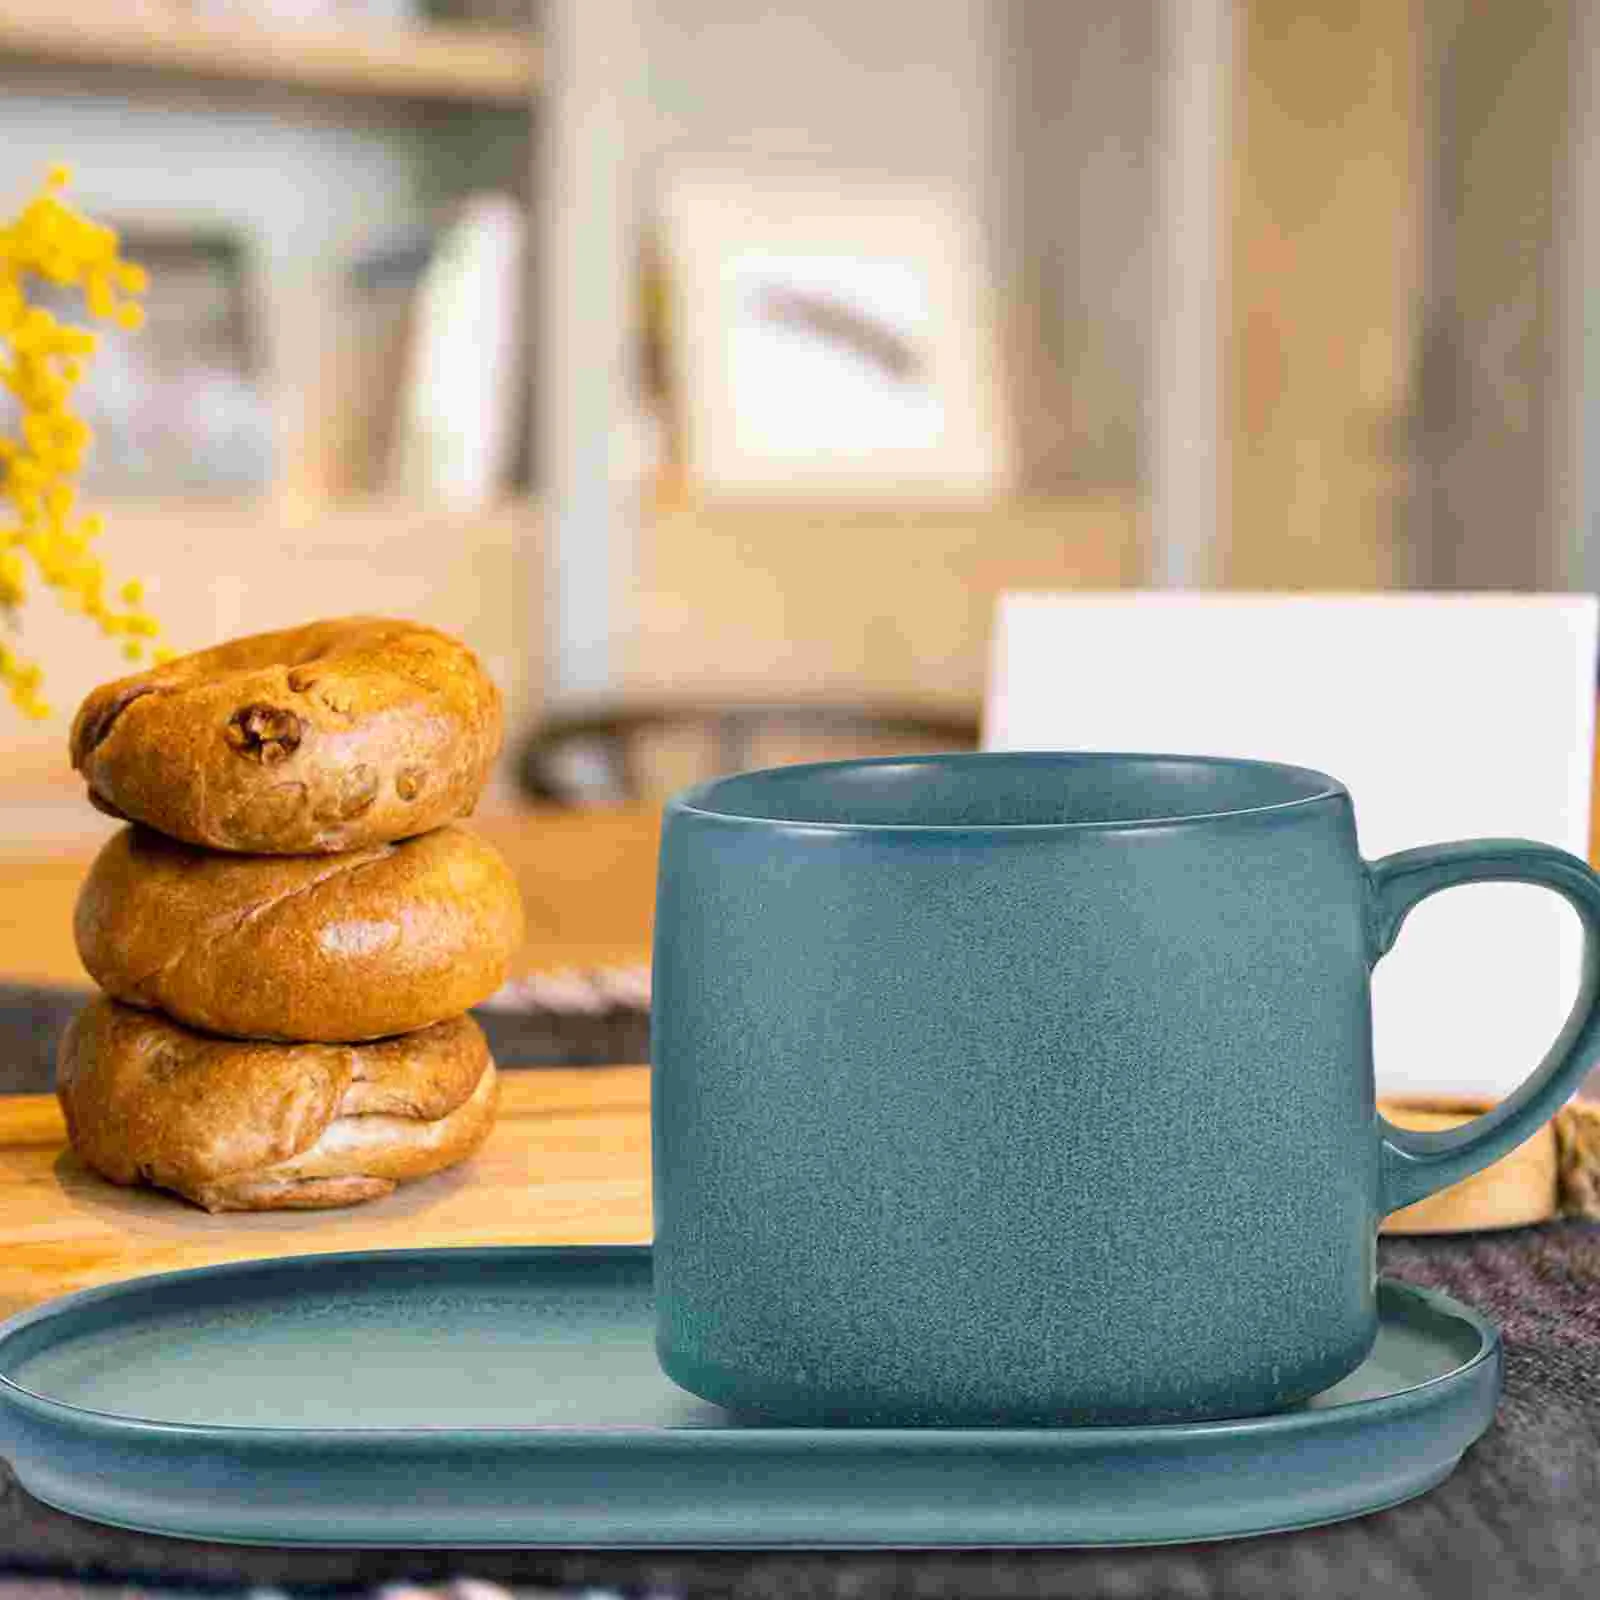 

Cutlery Decorative Water Mug Household Coffee Cup Drinking Breakfast Mugs Ceramics With Saucer Desktop